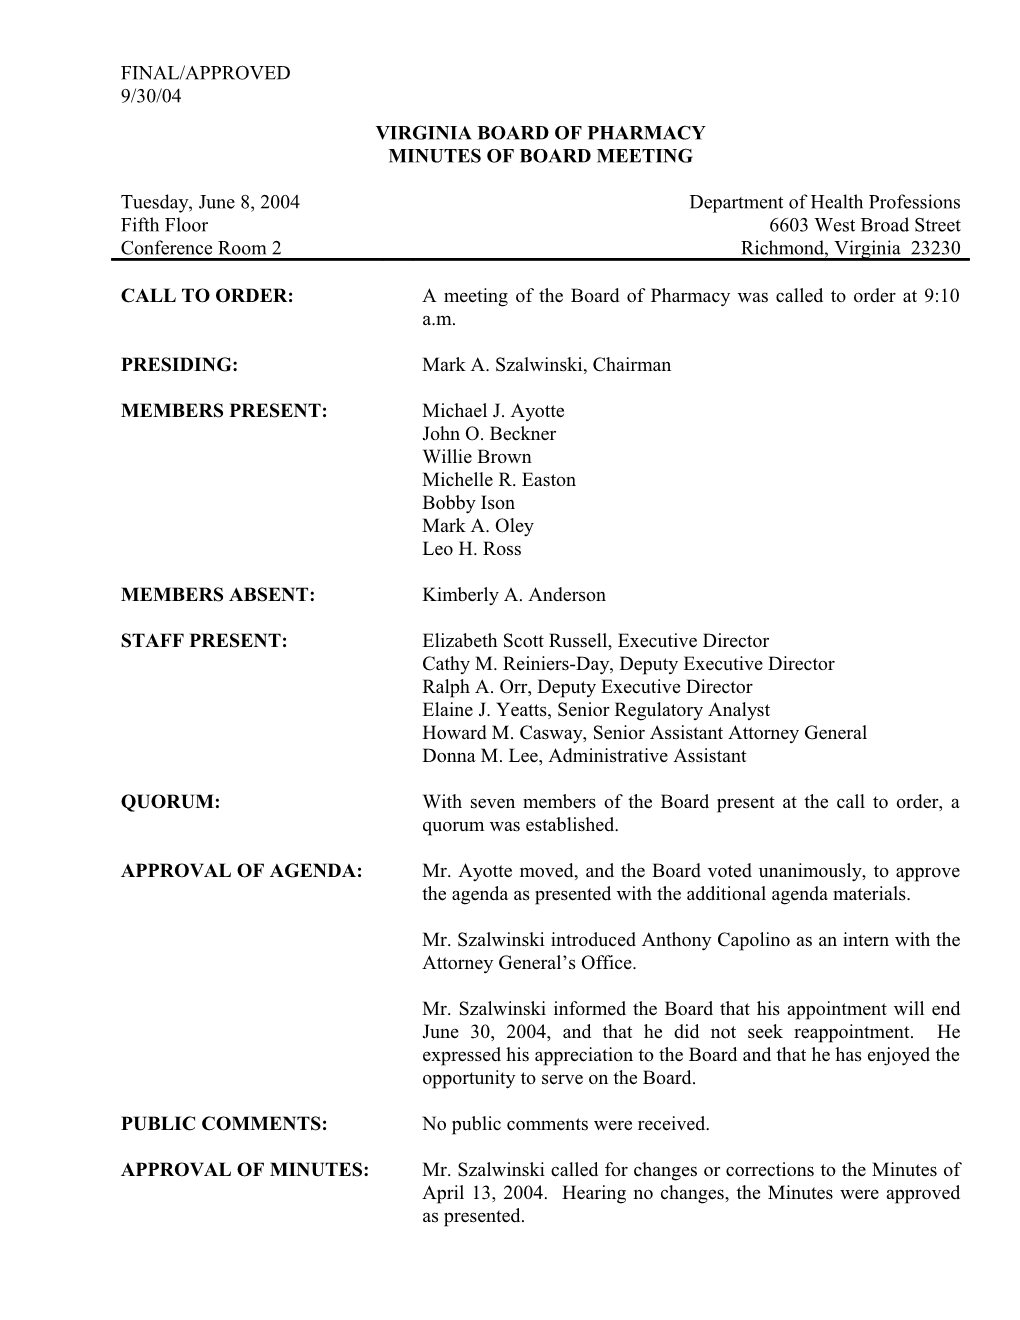 Virginia Board of Pharmacy Minutes 06-08-2004